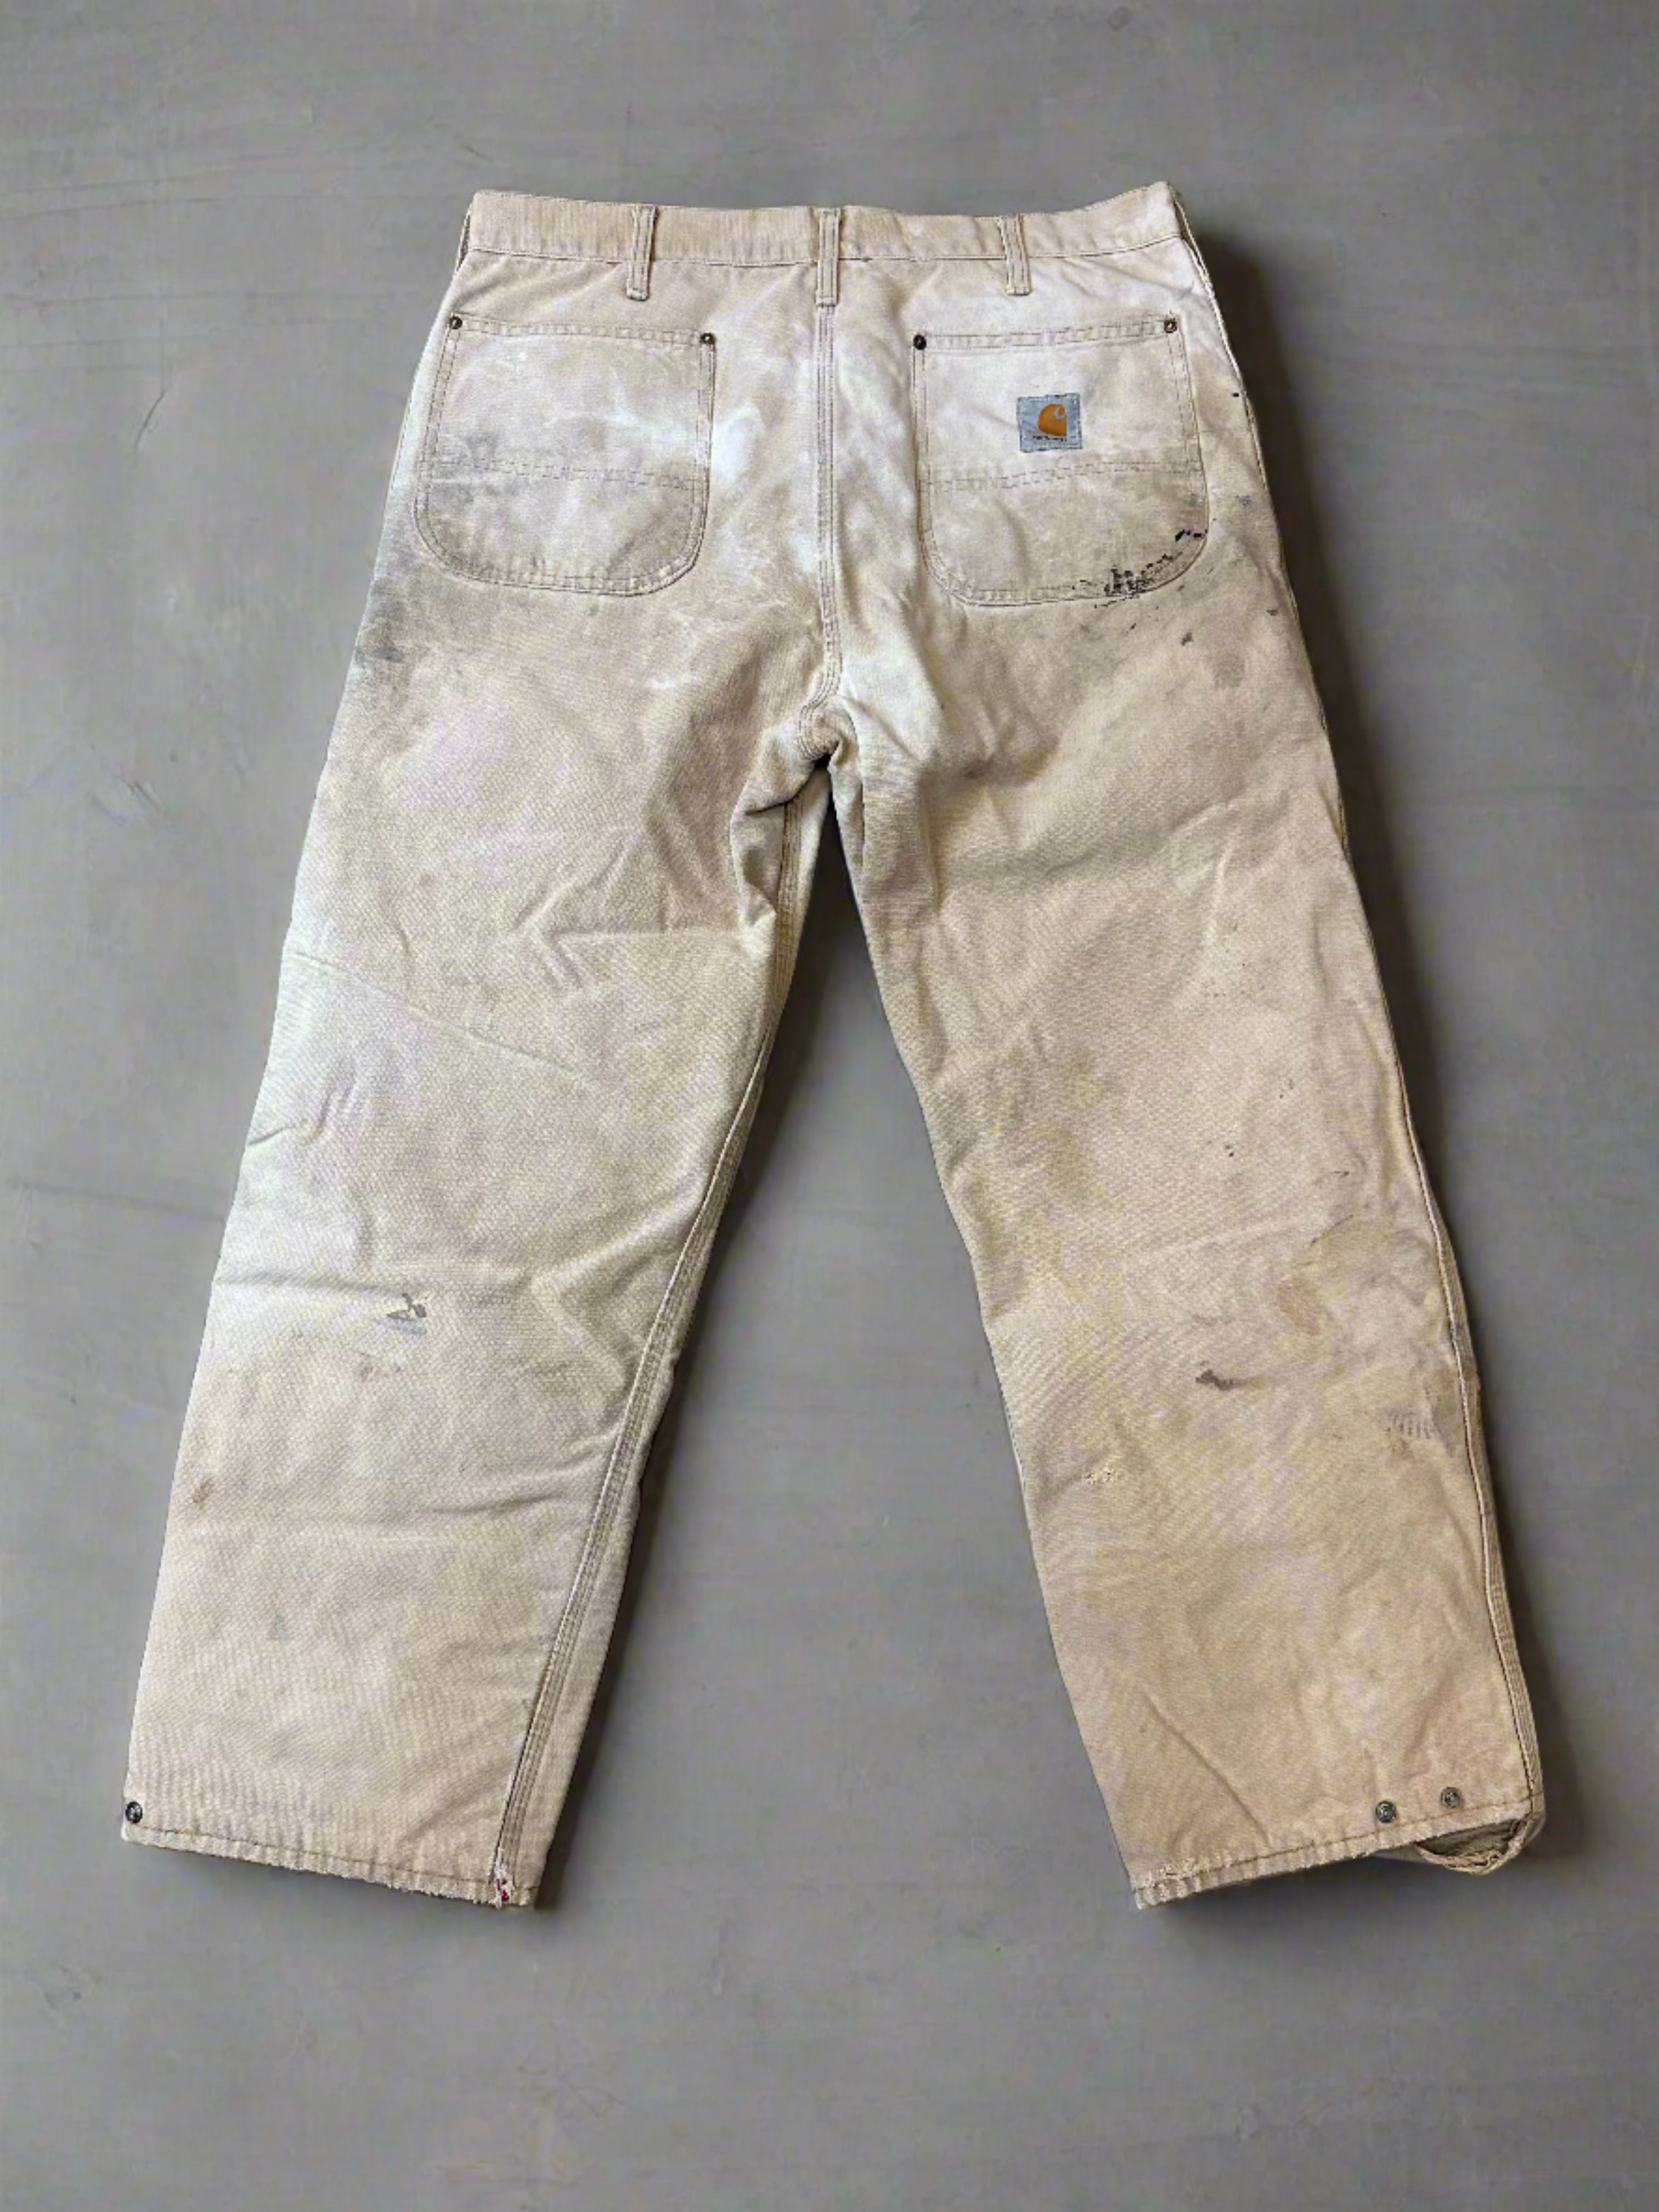 Vintage Carhartt Distressed 90s Pants - size 38x30